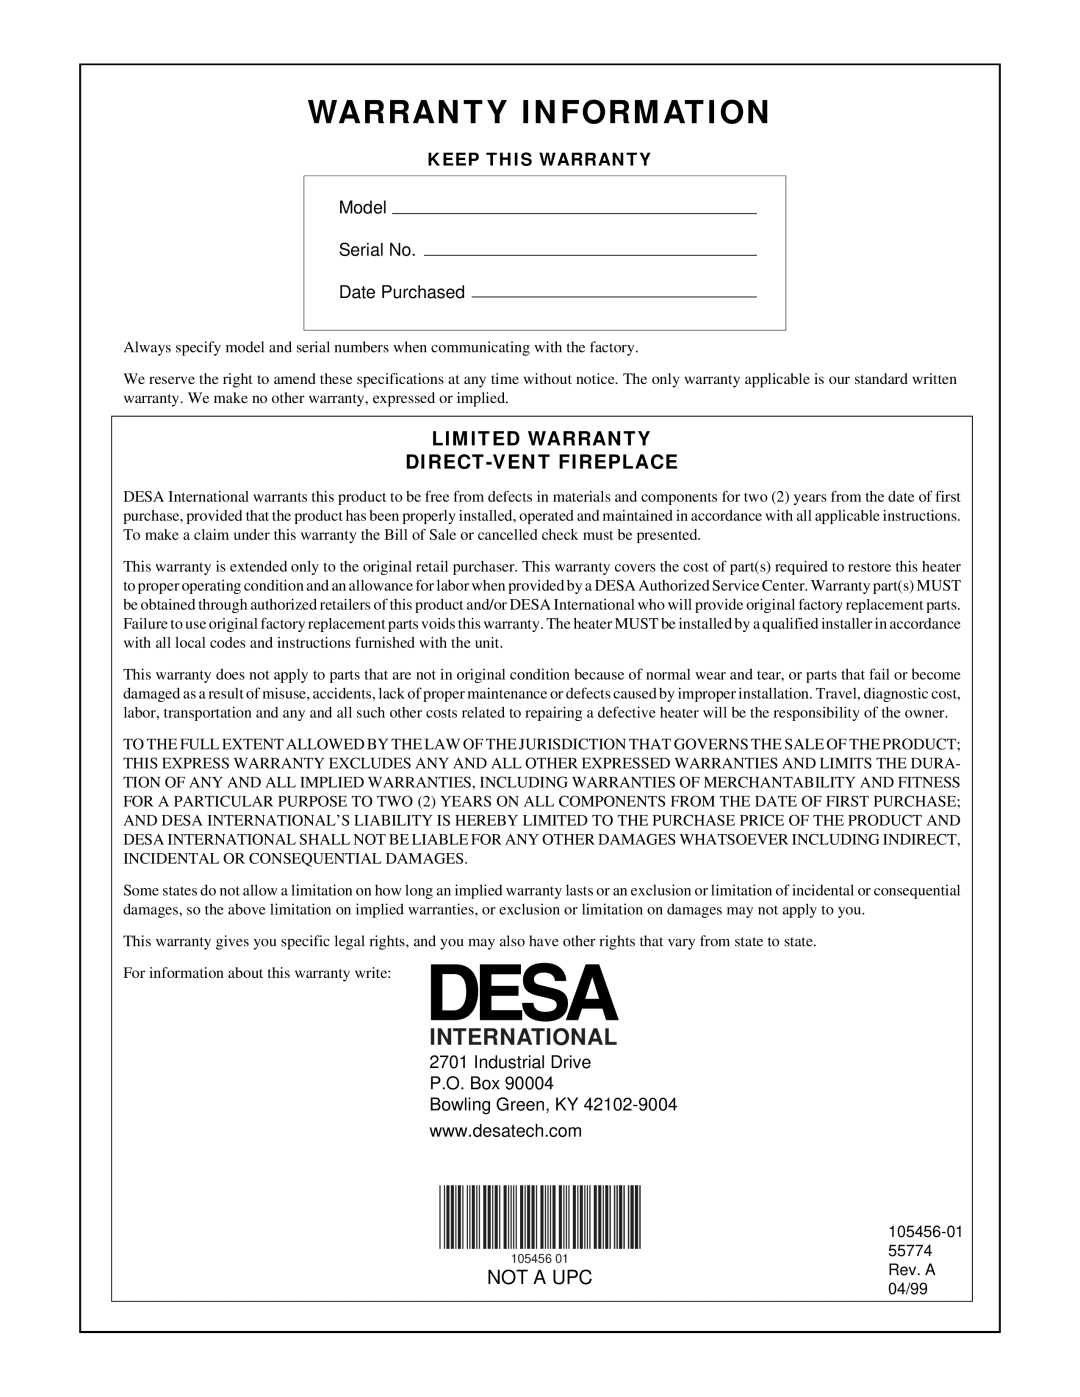 Desa CHDV34(N/P)(A) Warranty Information, Limited Warranty Direct-Ventfireplace, International, NOT A UPCRev. A 